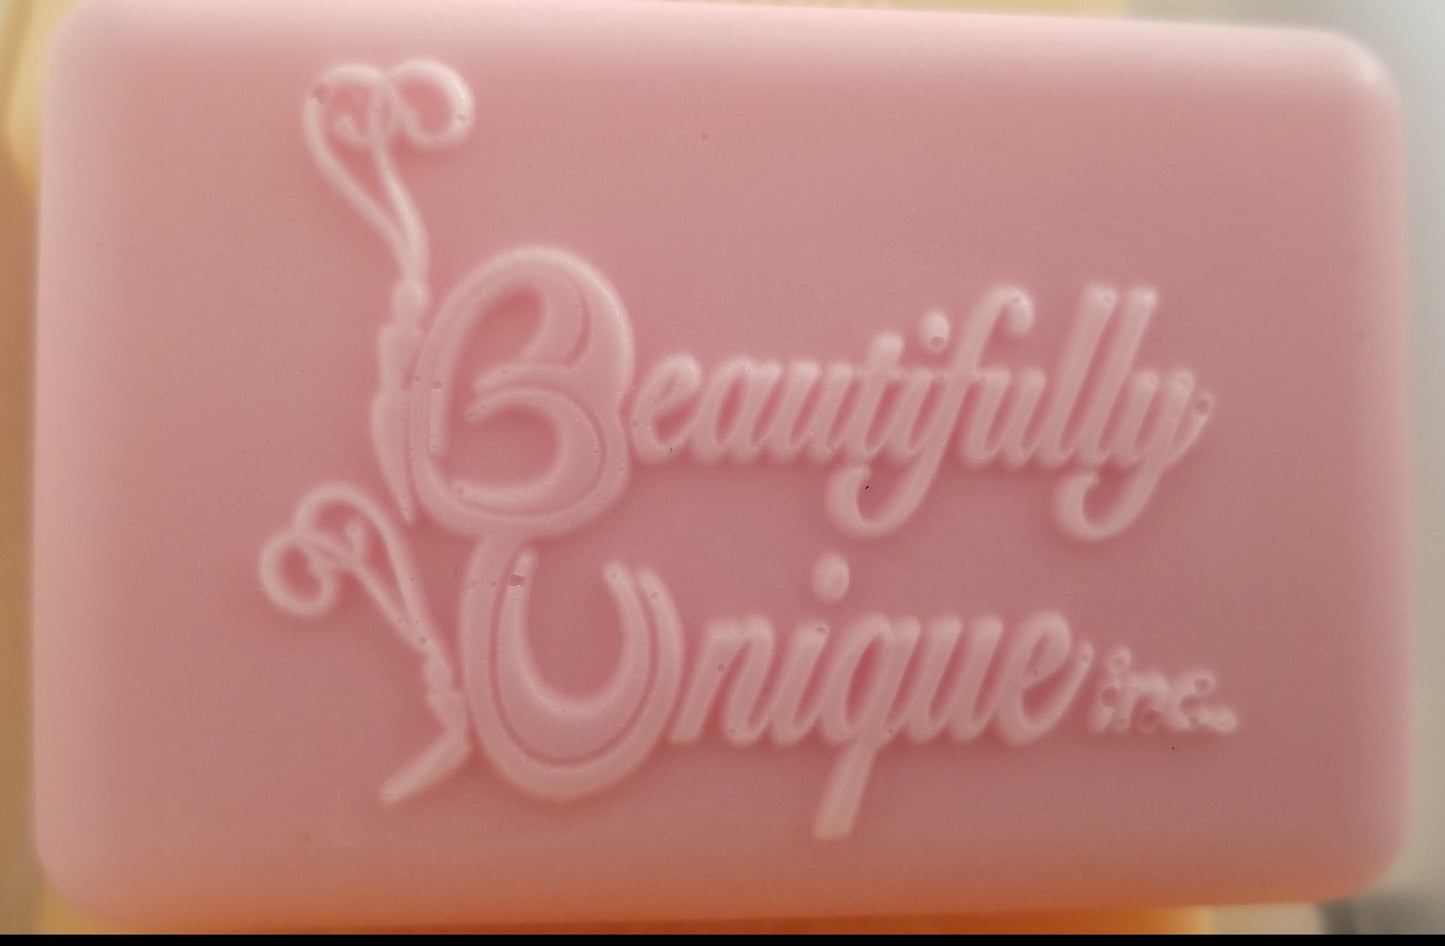 Beautifully Unique Inc. Logo Soap